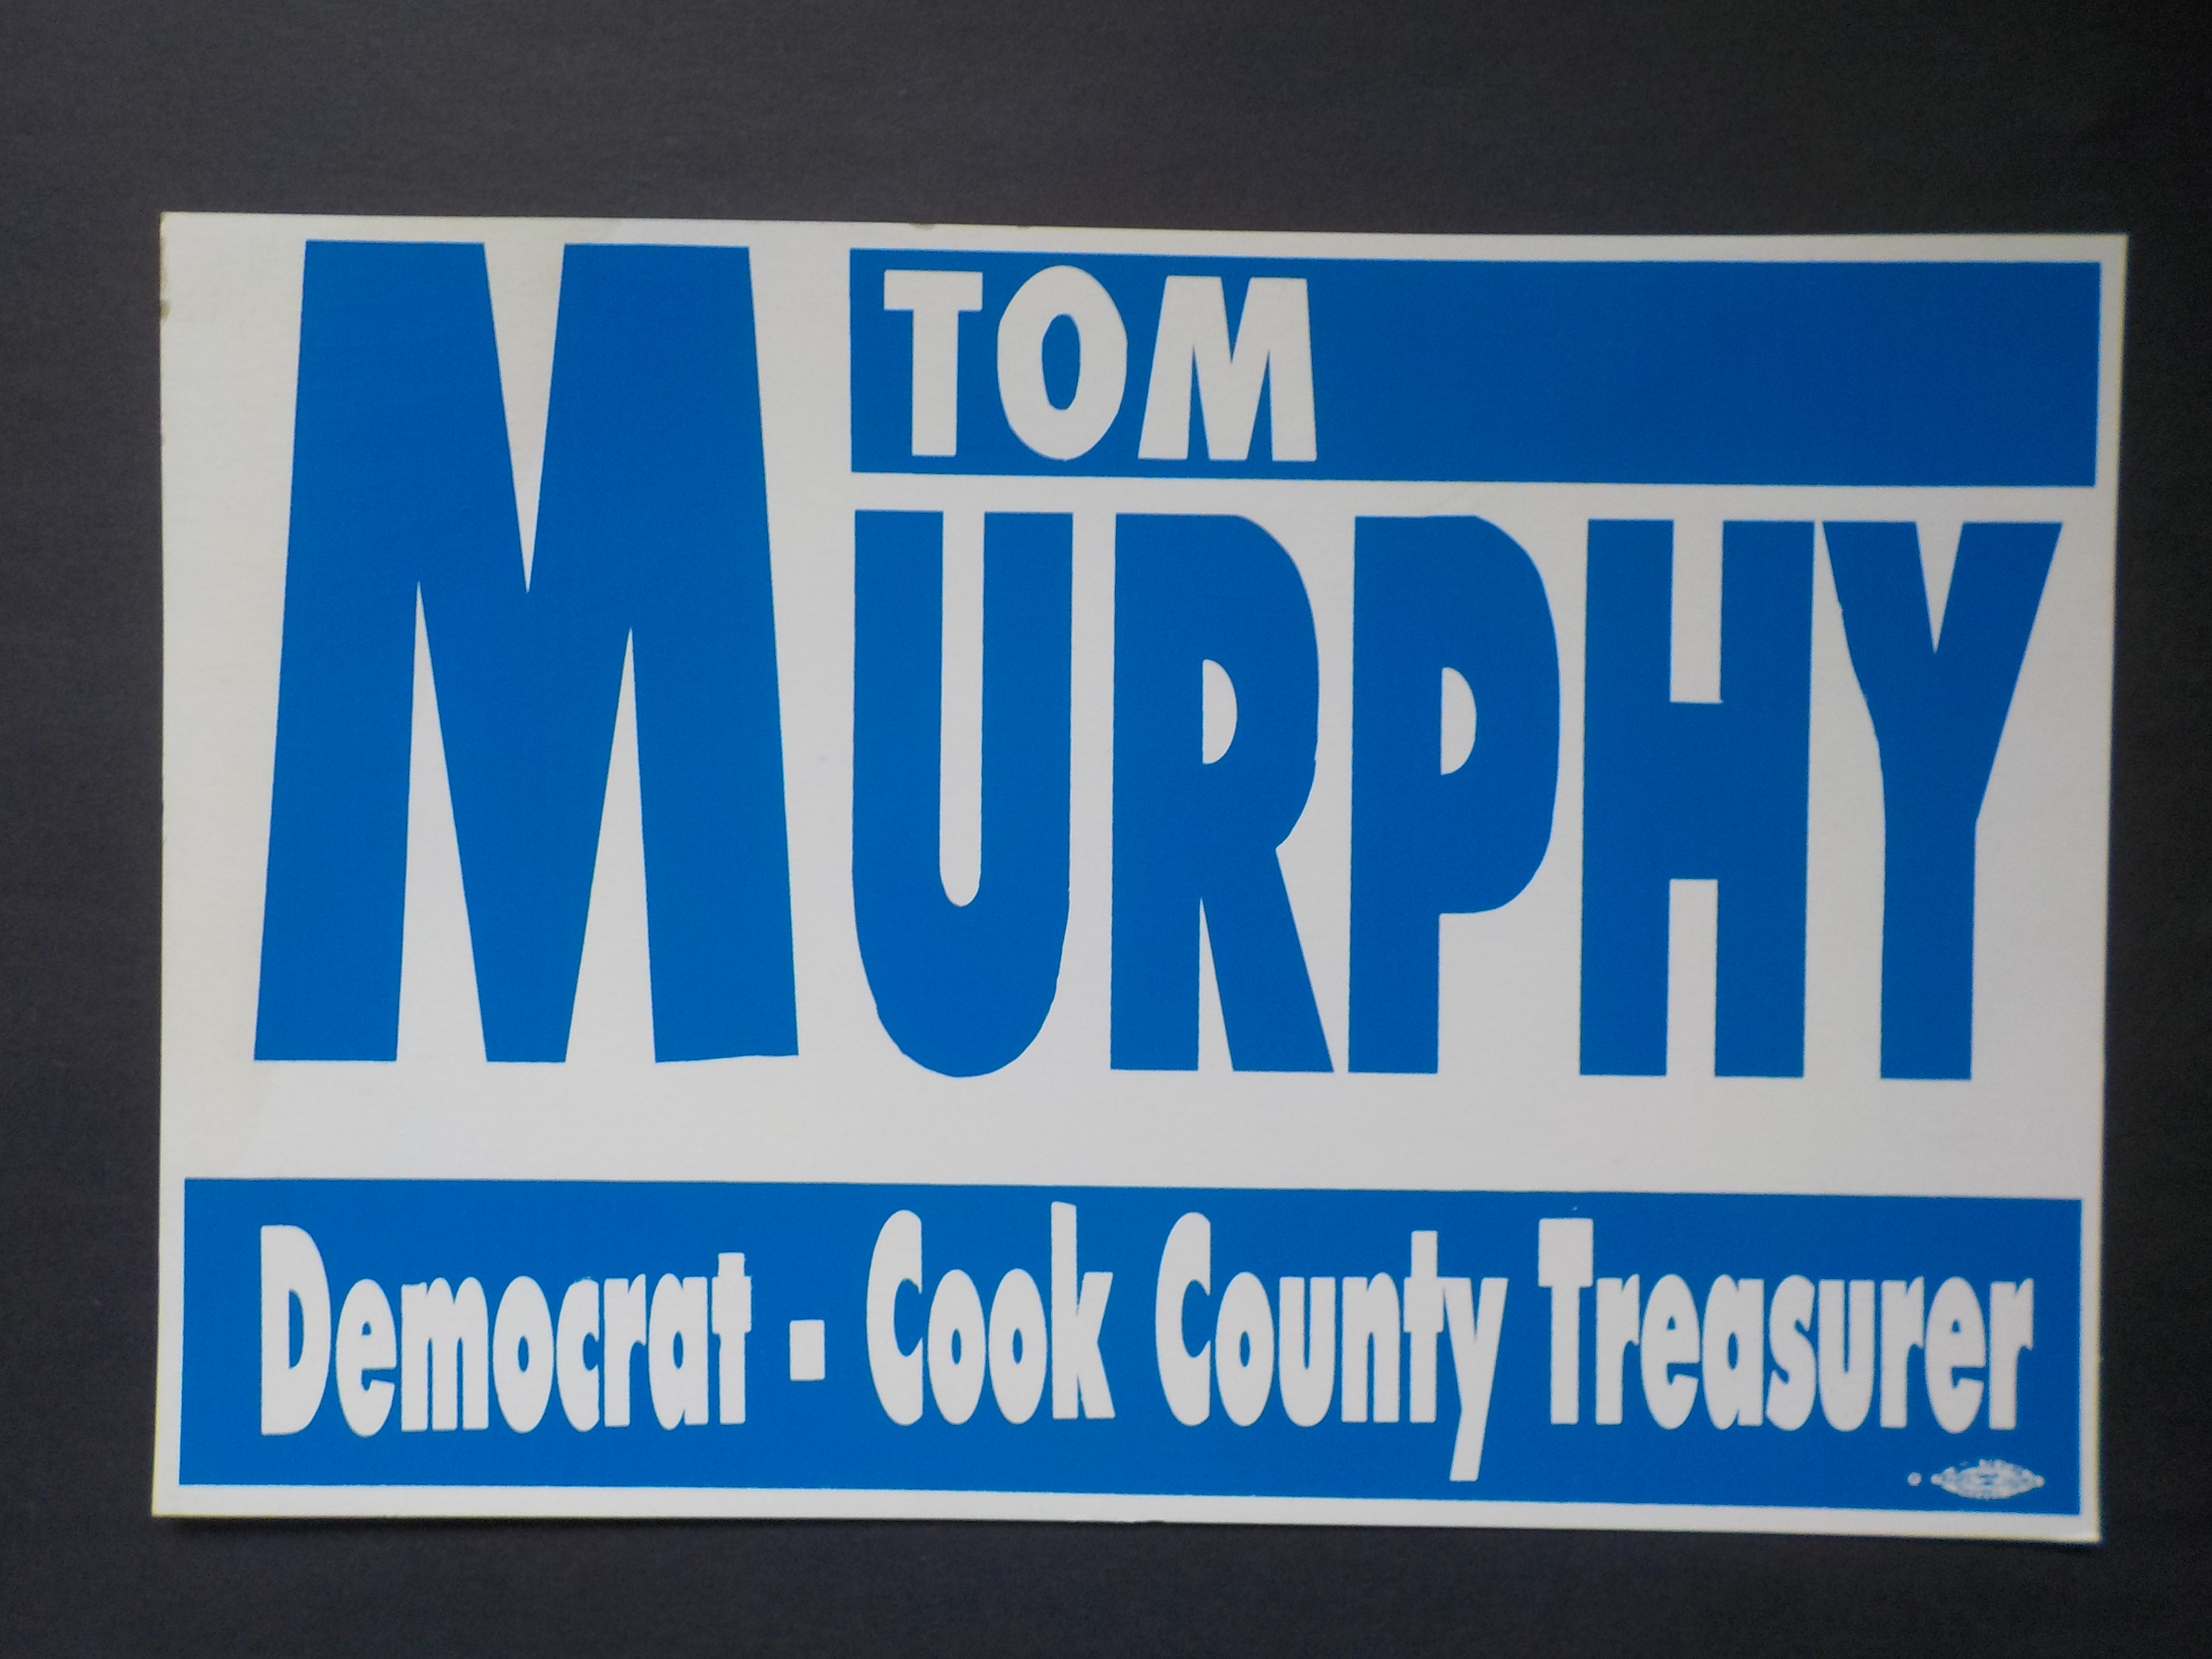 Tom Murphy